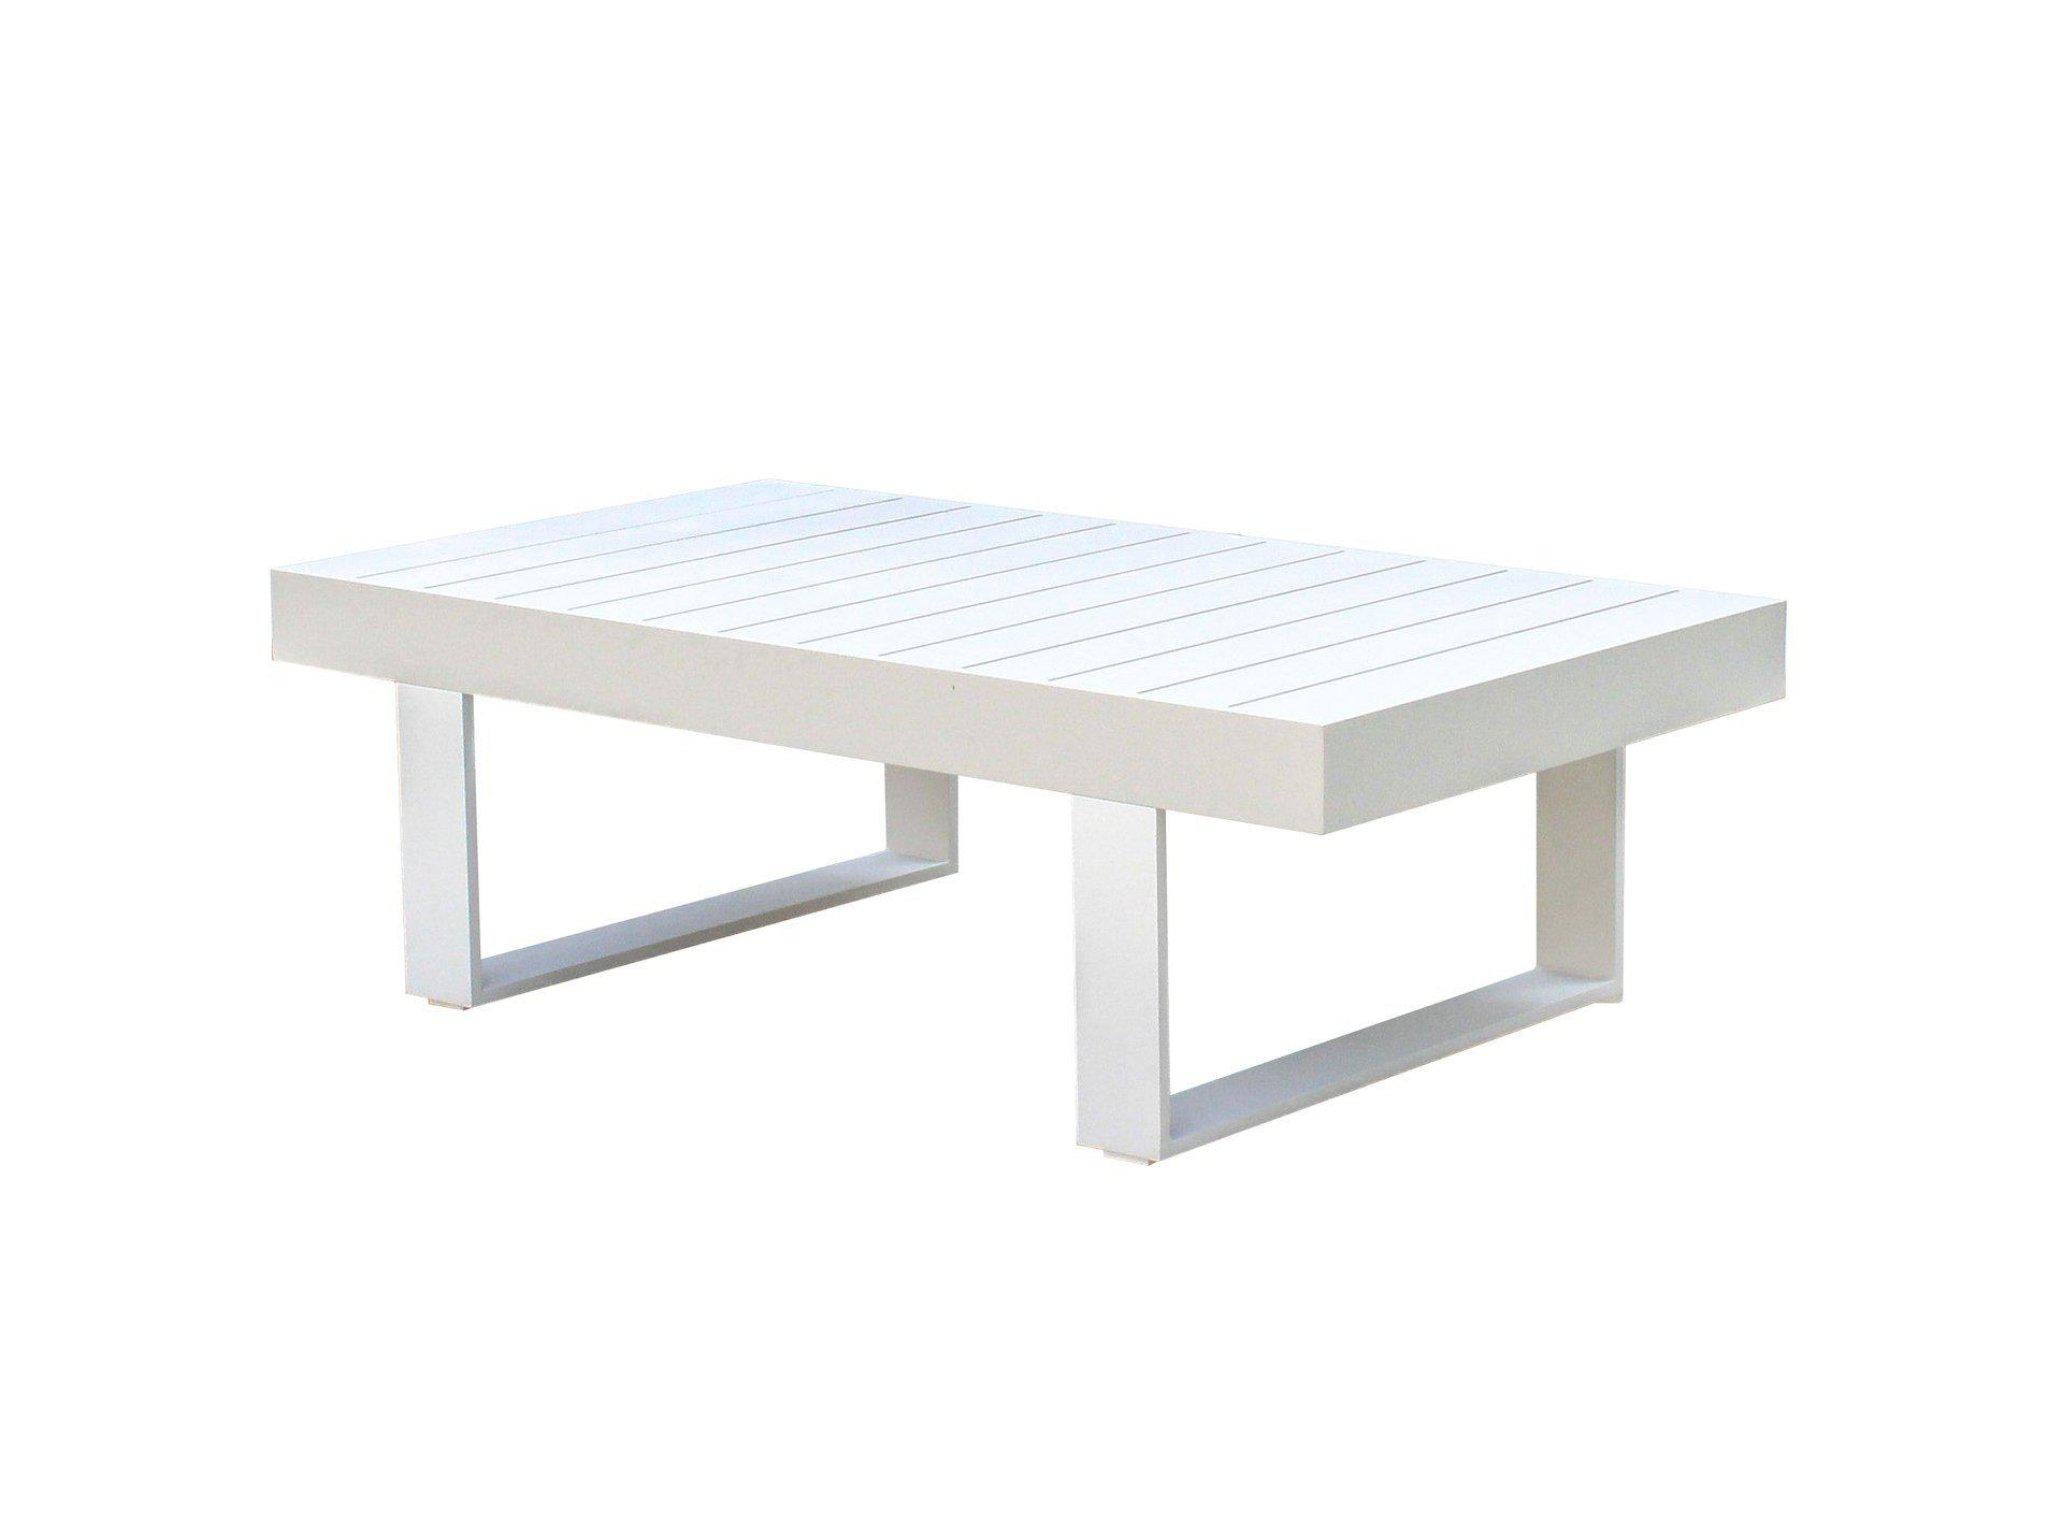 FurnitureOkay Manly Aluminium Outdoor Coffee Table — White